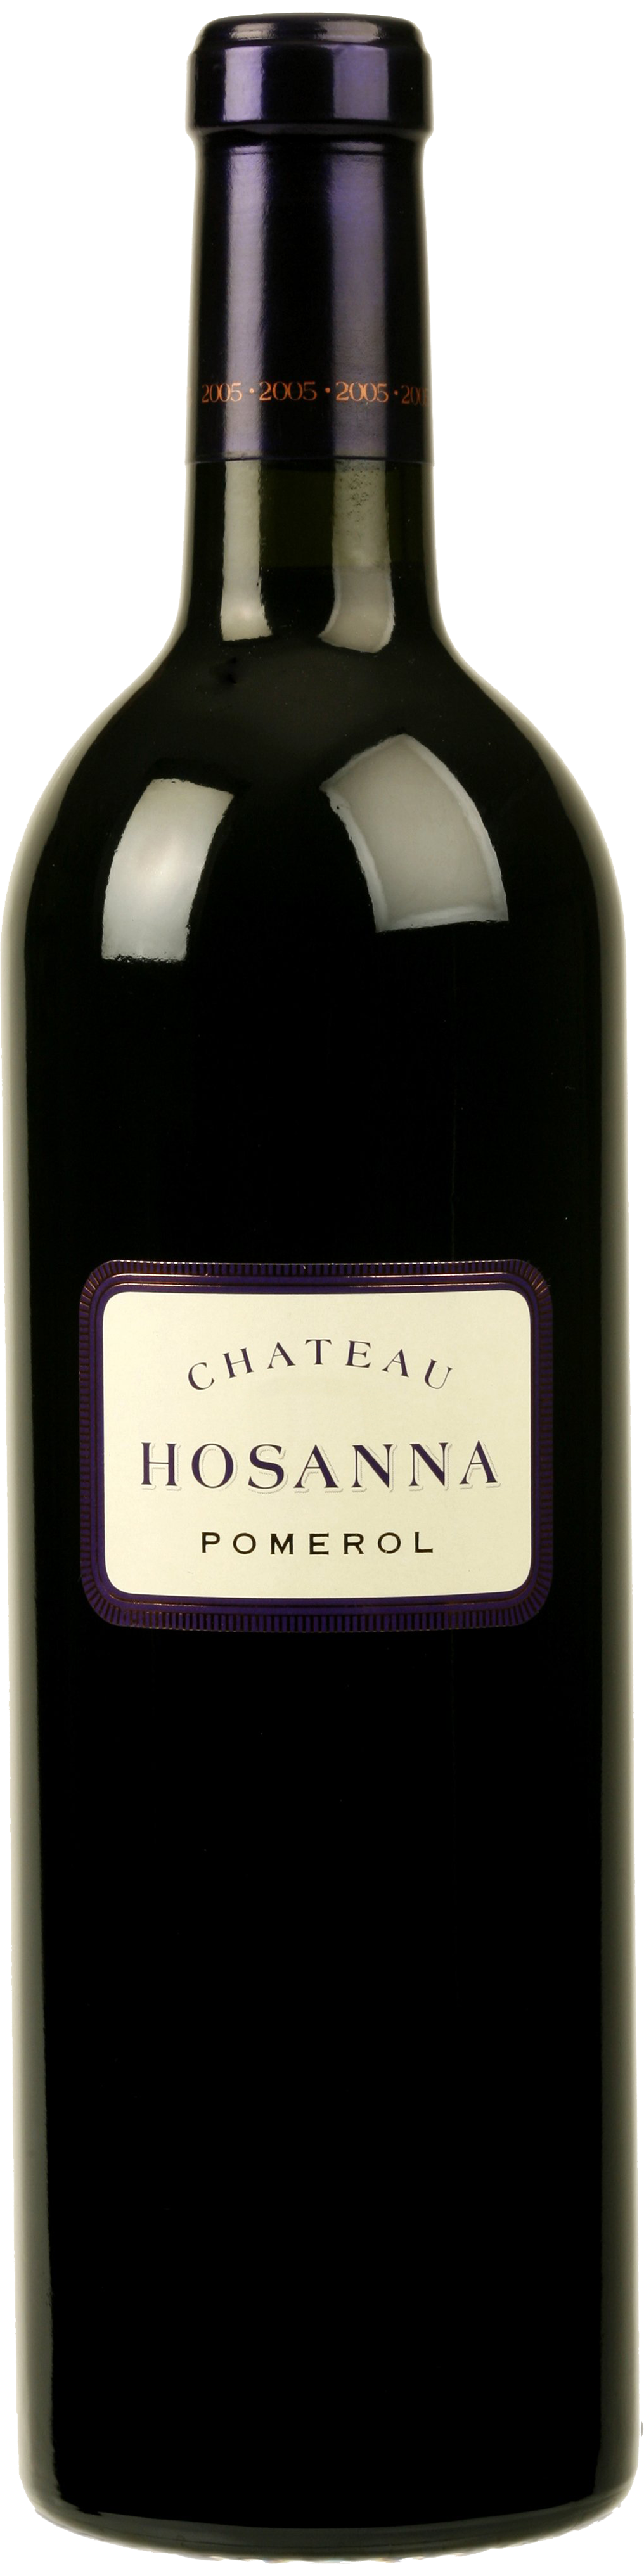 Bottle shot of 2001 Château Hosanna, Pomerol